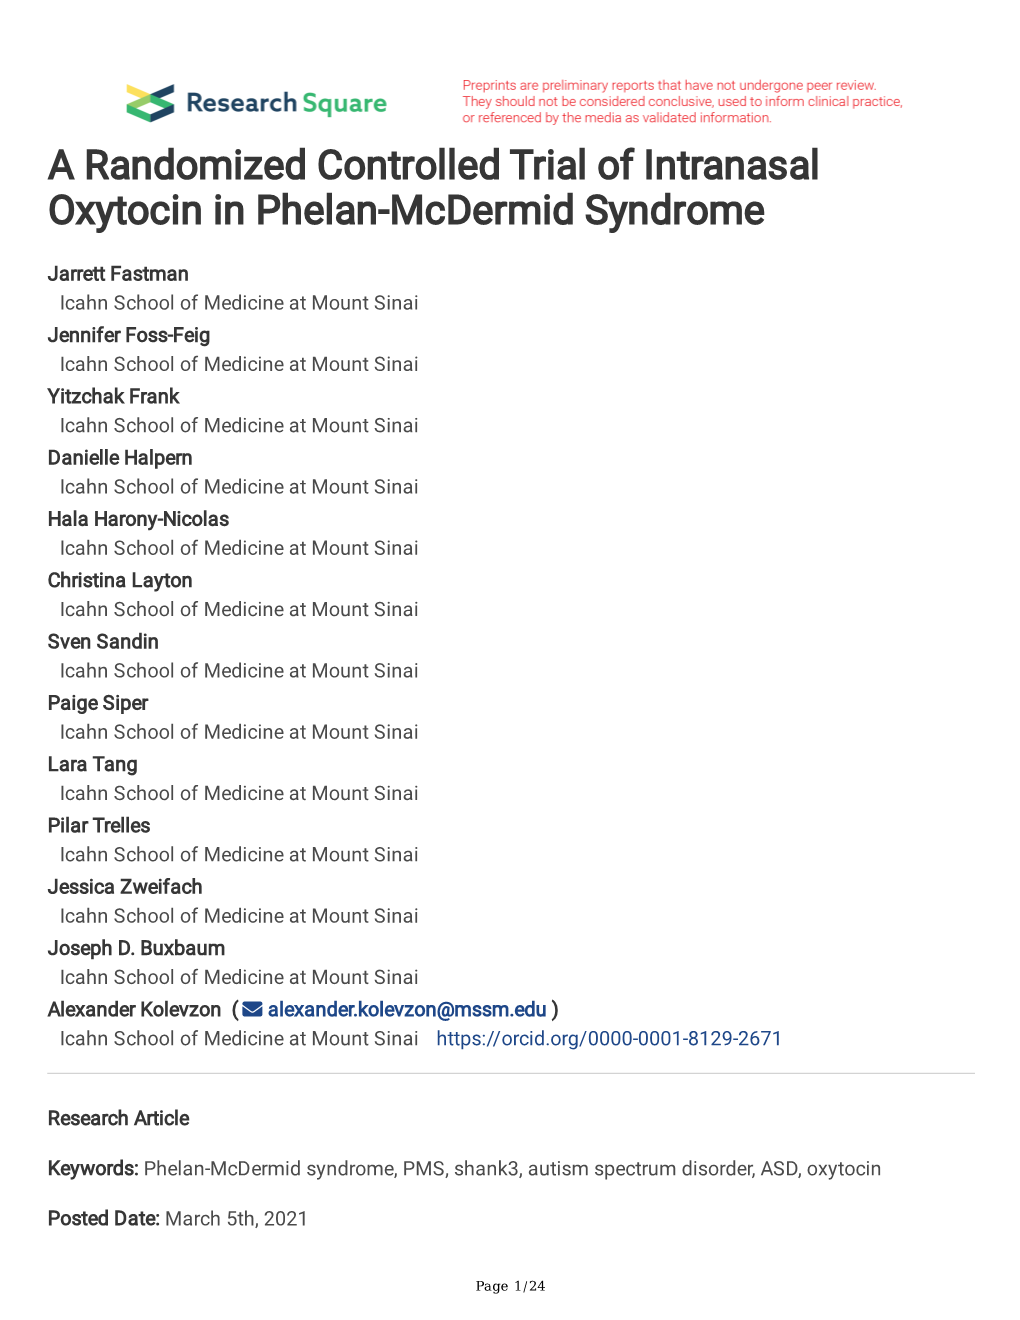 A Randomized Controlled Trial of Intranasal Oxytocin in Phelan-Mcdermid Syndrome